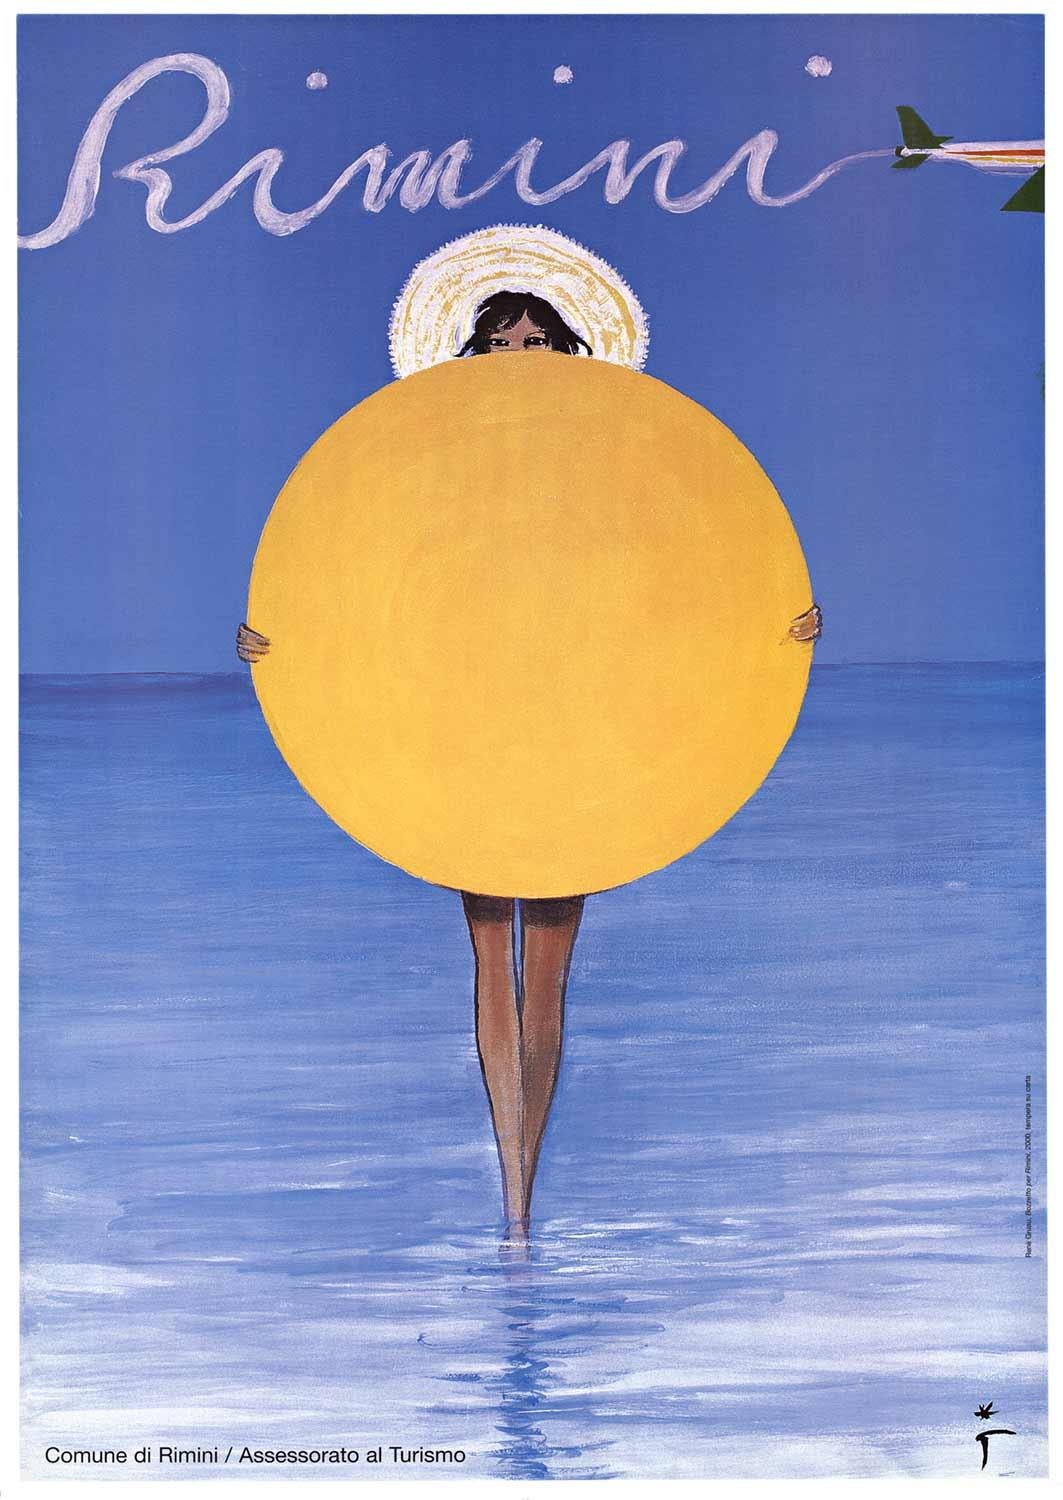 René Gruau Portrait Print - Original "Rimini" vintage poster  woman on beach holding the sun